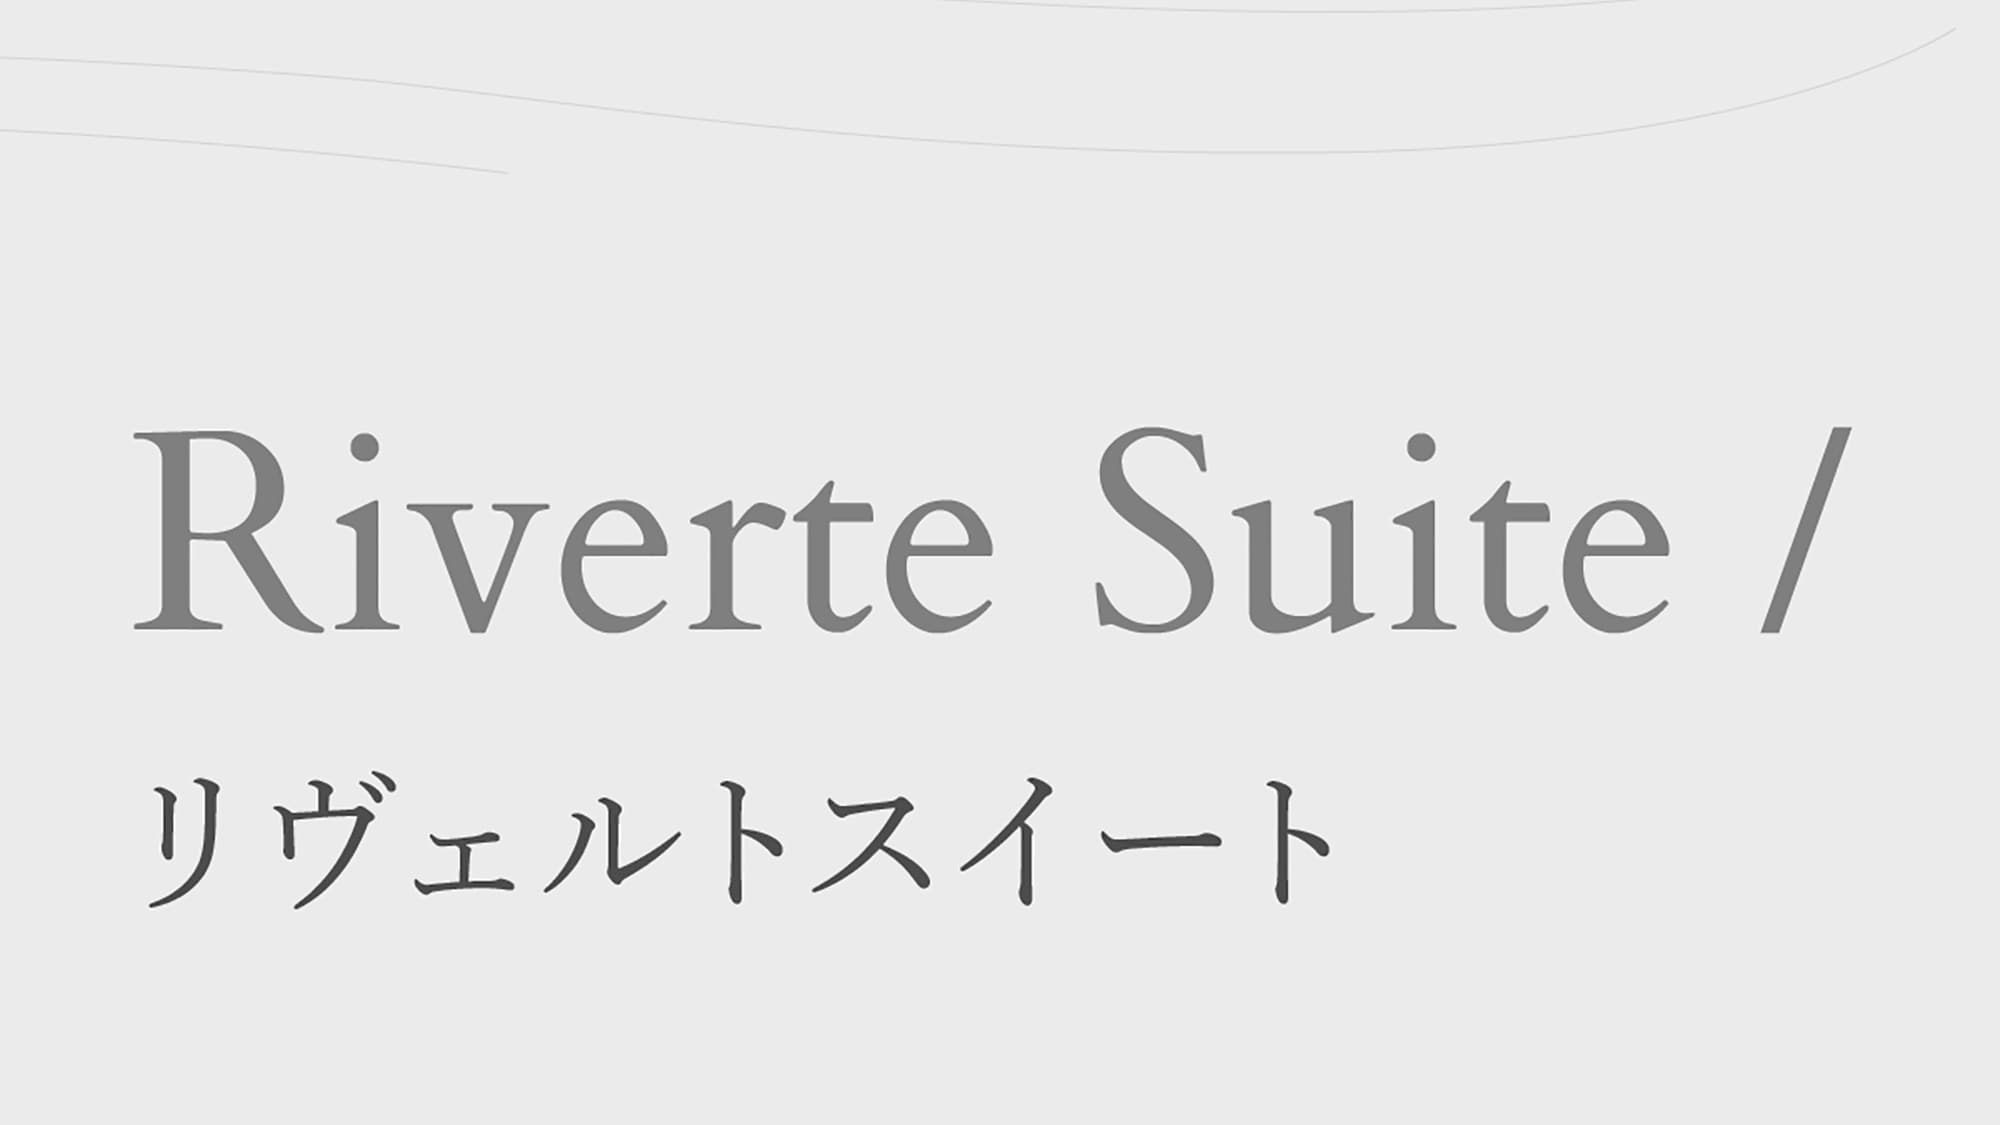 ■ Revert Suite ■